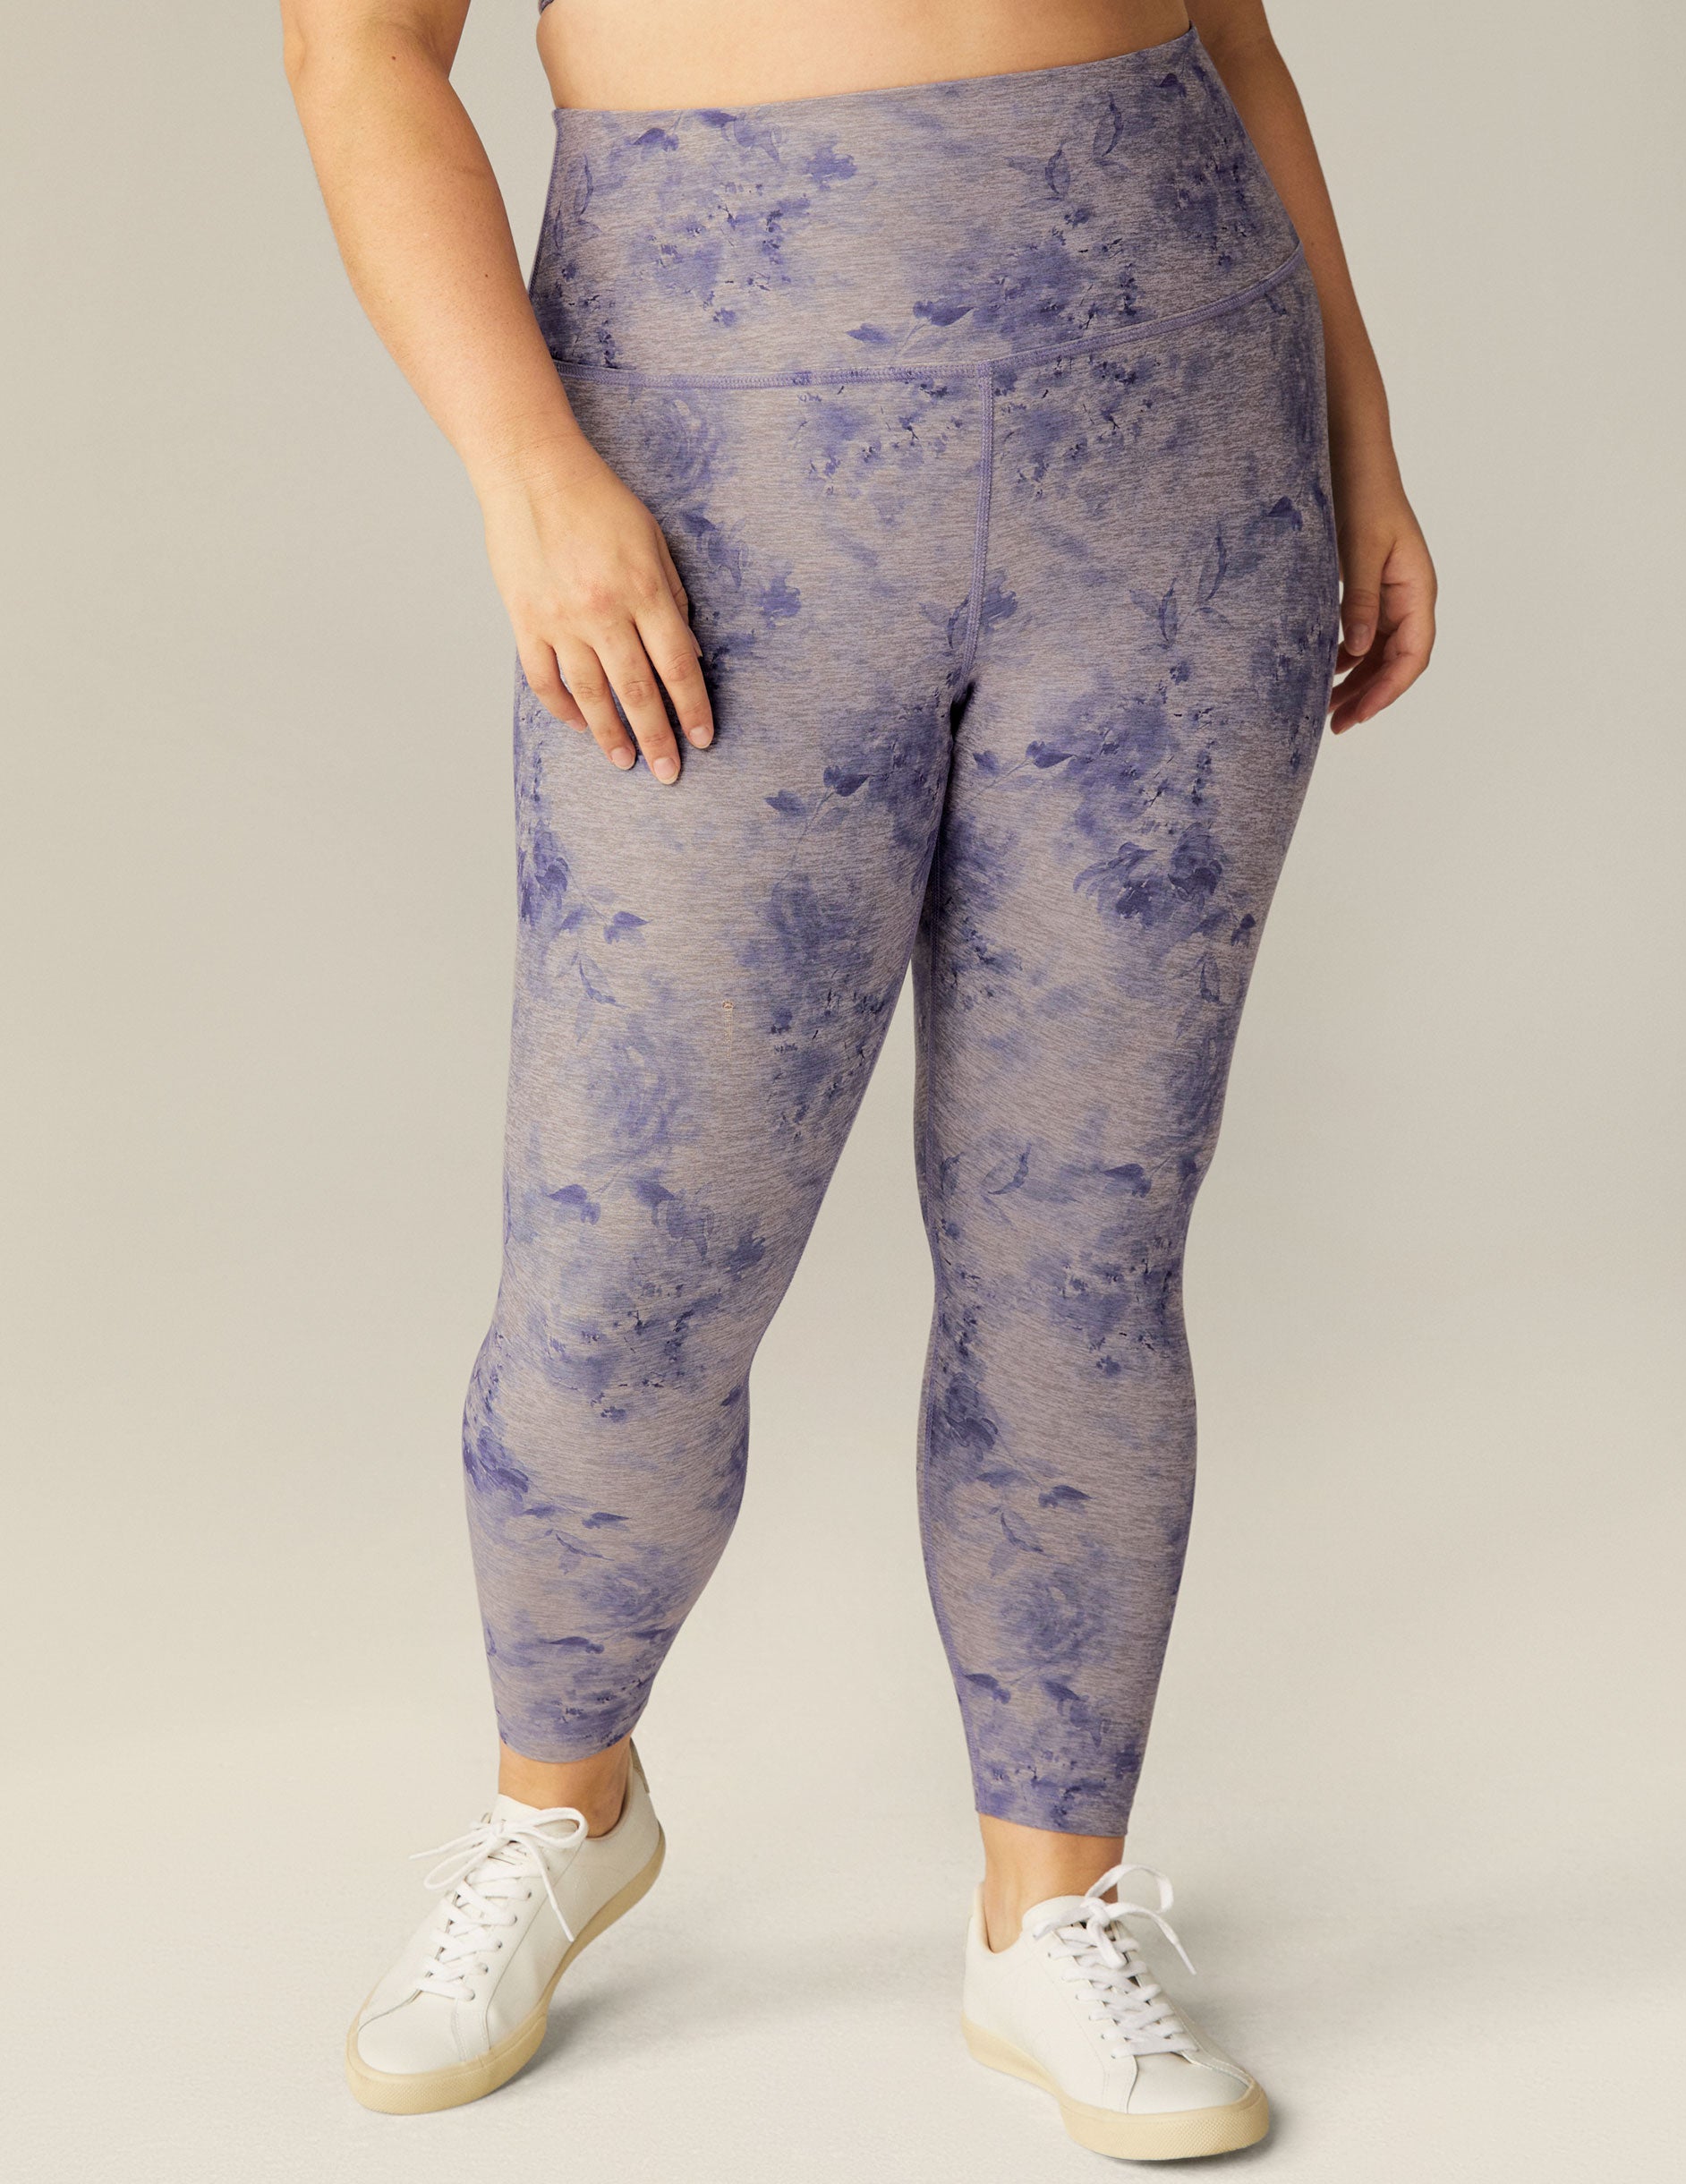 Purple Yoga Leggings, , Floral Pattern, Extra Large Size Leggings, Plus  Sized Printed Leggings, High rise Leggings 